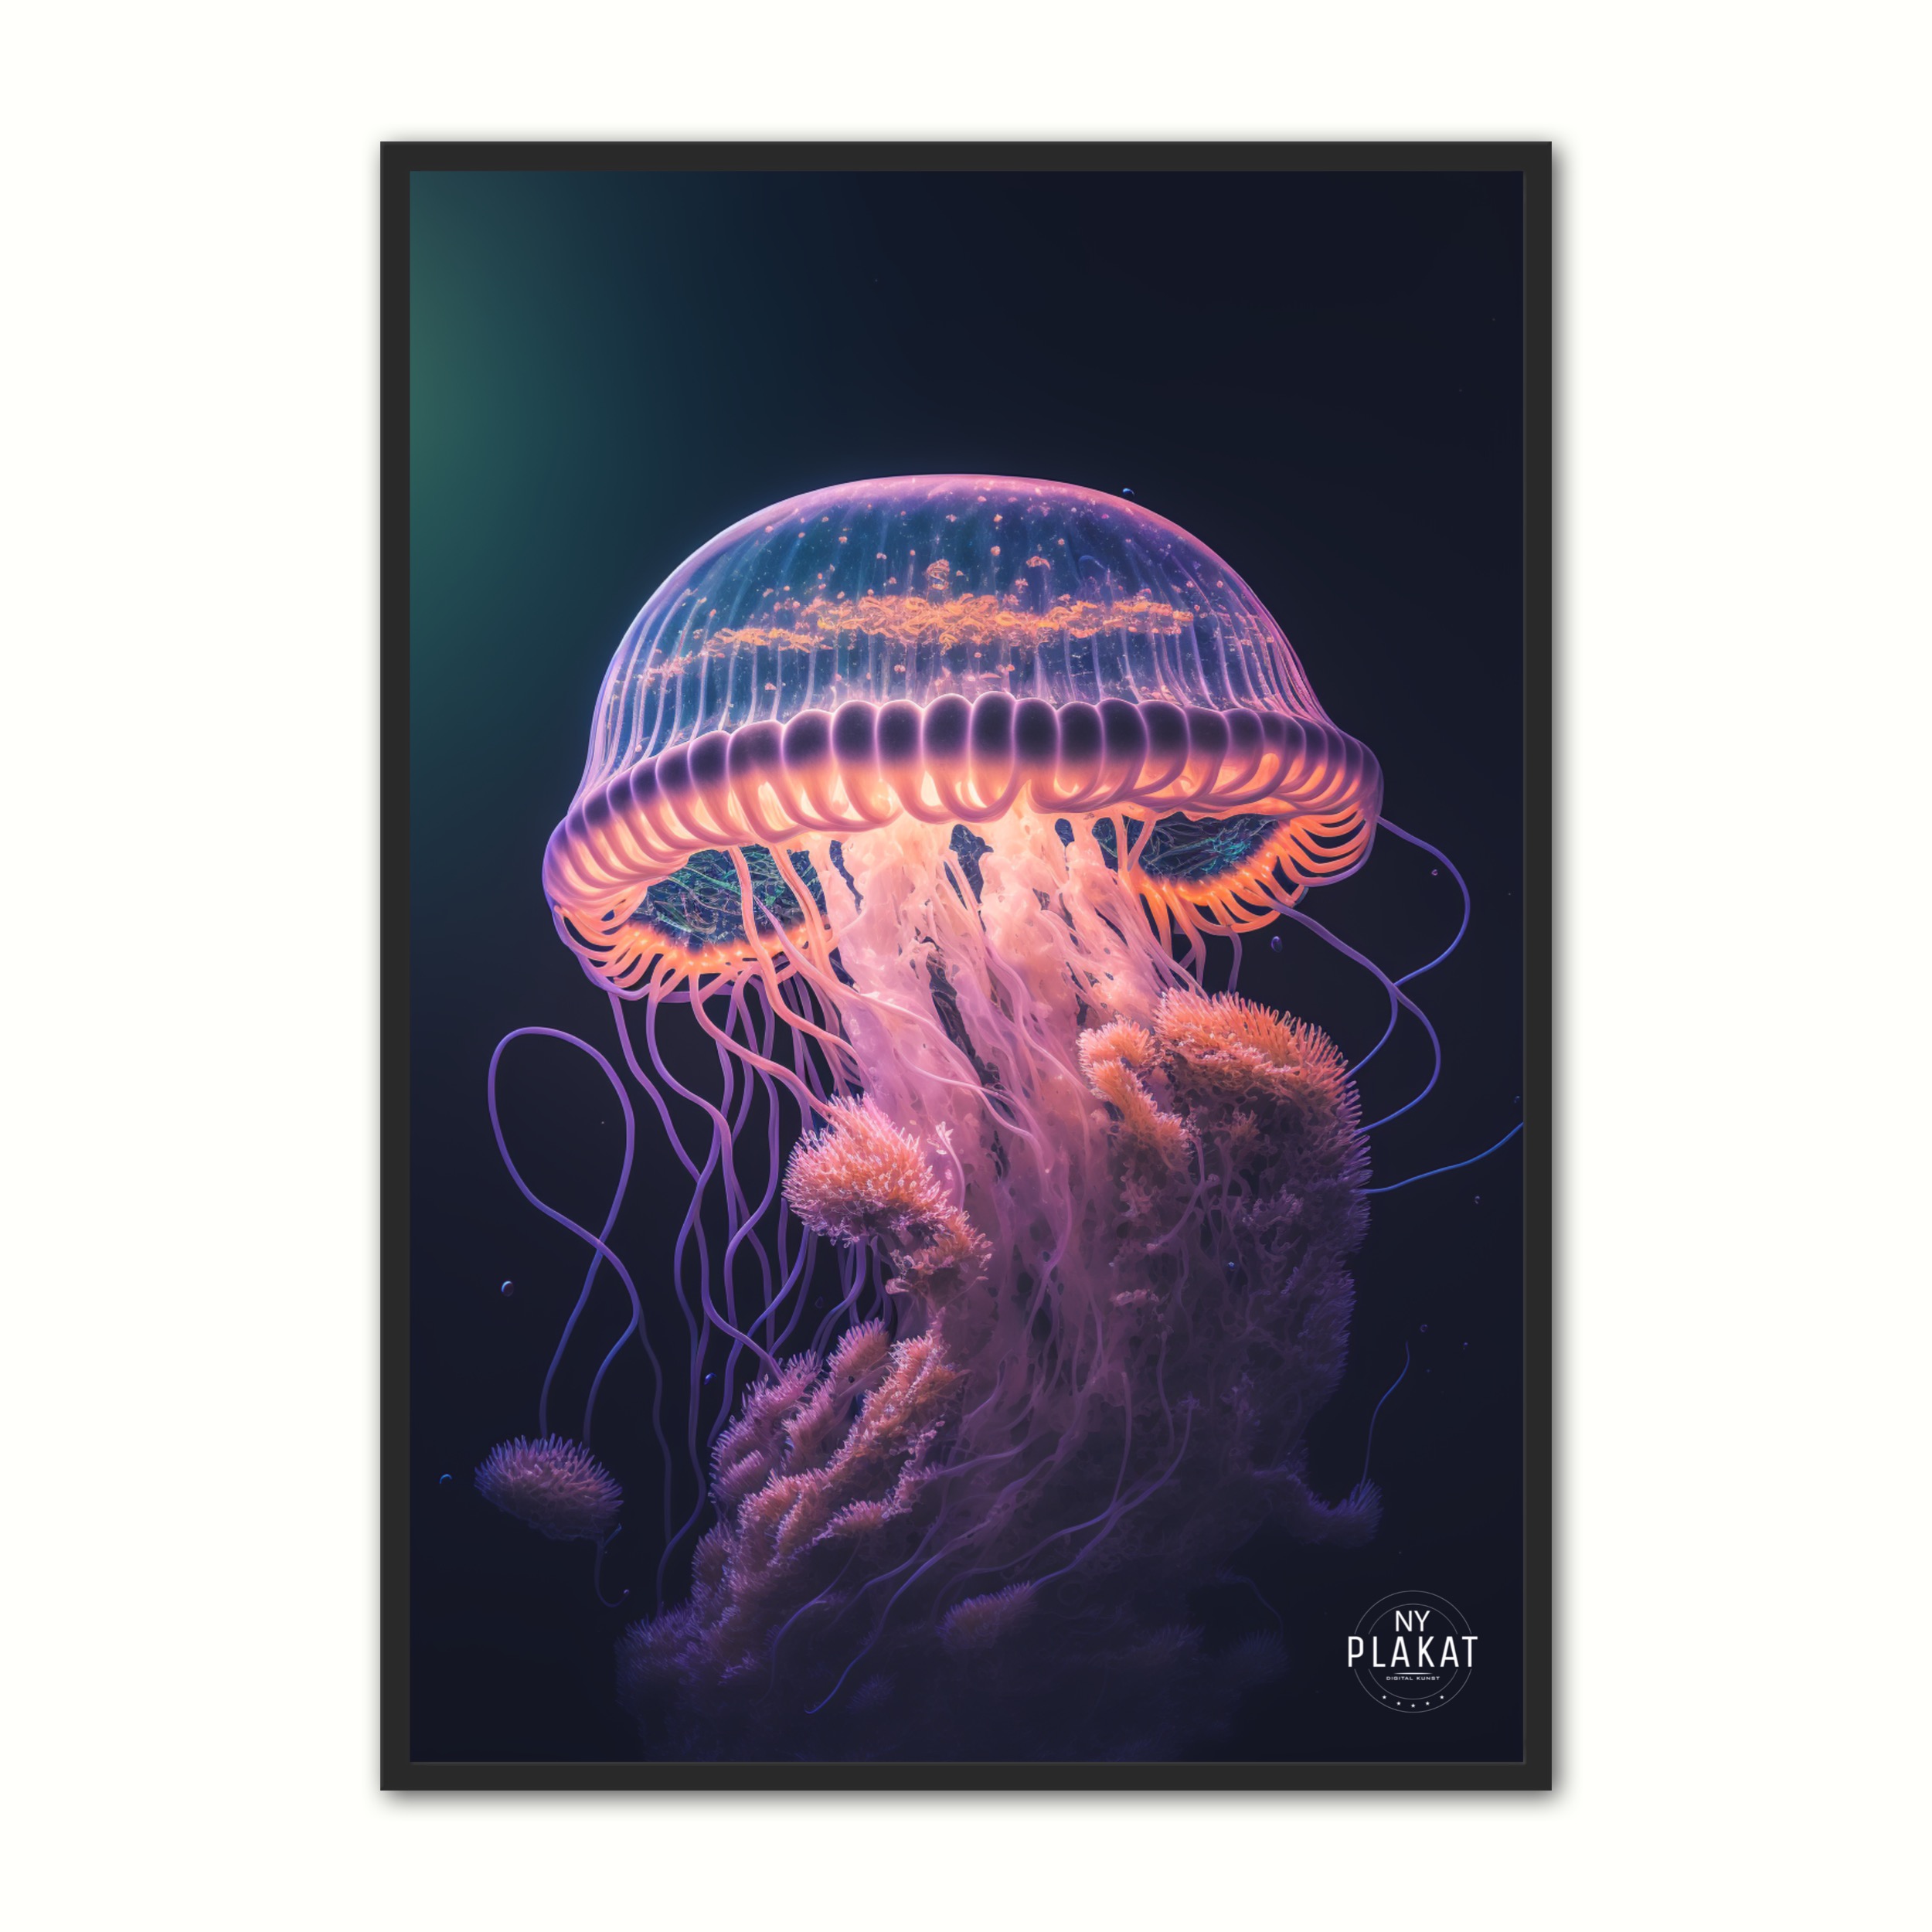 Se Jellyfish plakat No. 1 30 x 40 cm hos Nyplakat.dk